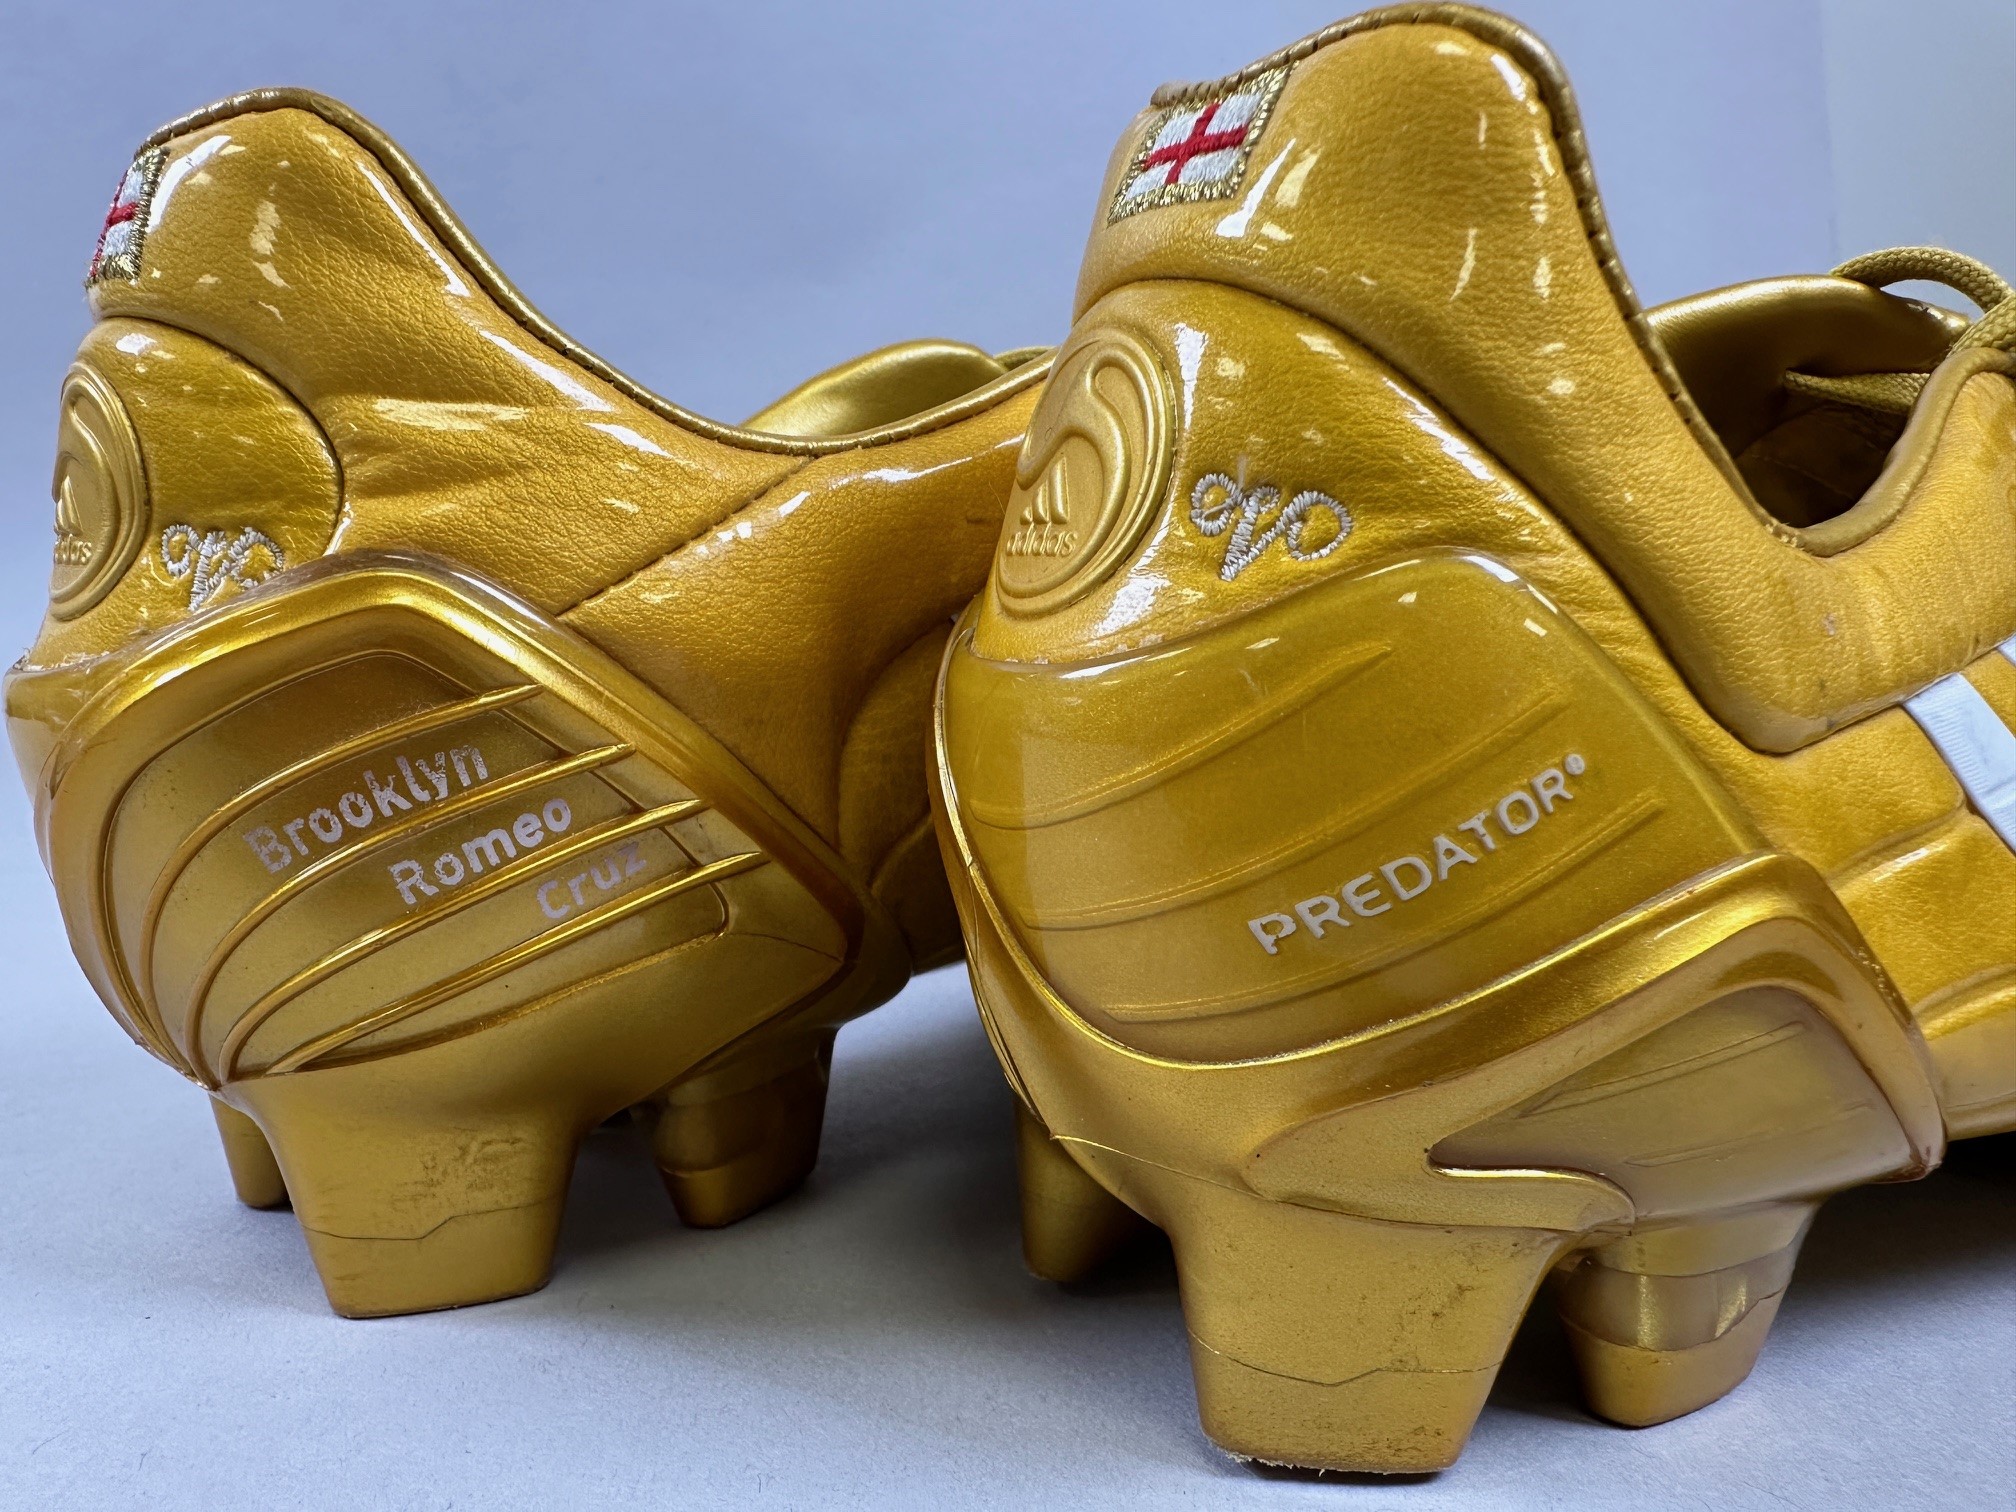 David Beckham pair of gold Adidas 2008 Predator football boots - Image 2 of 6